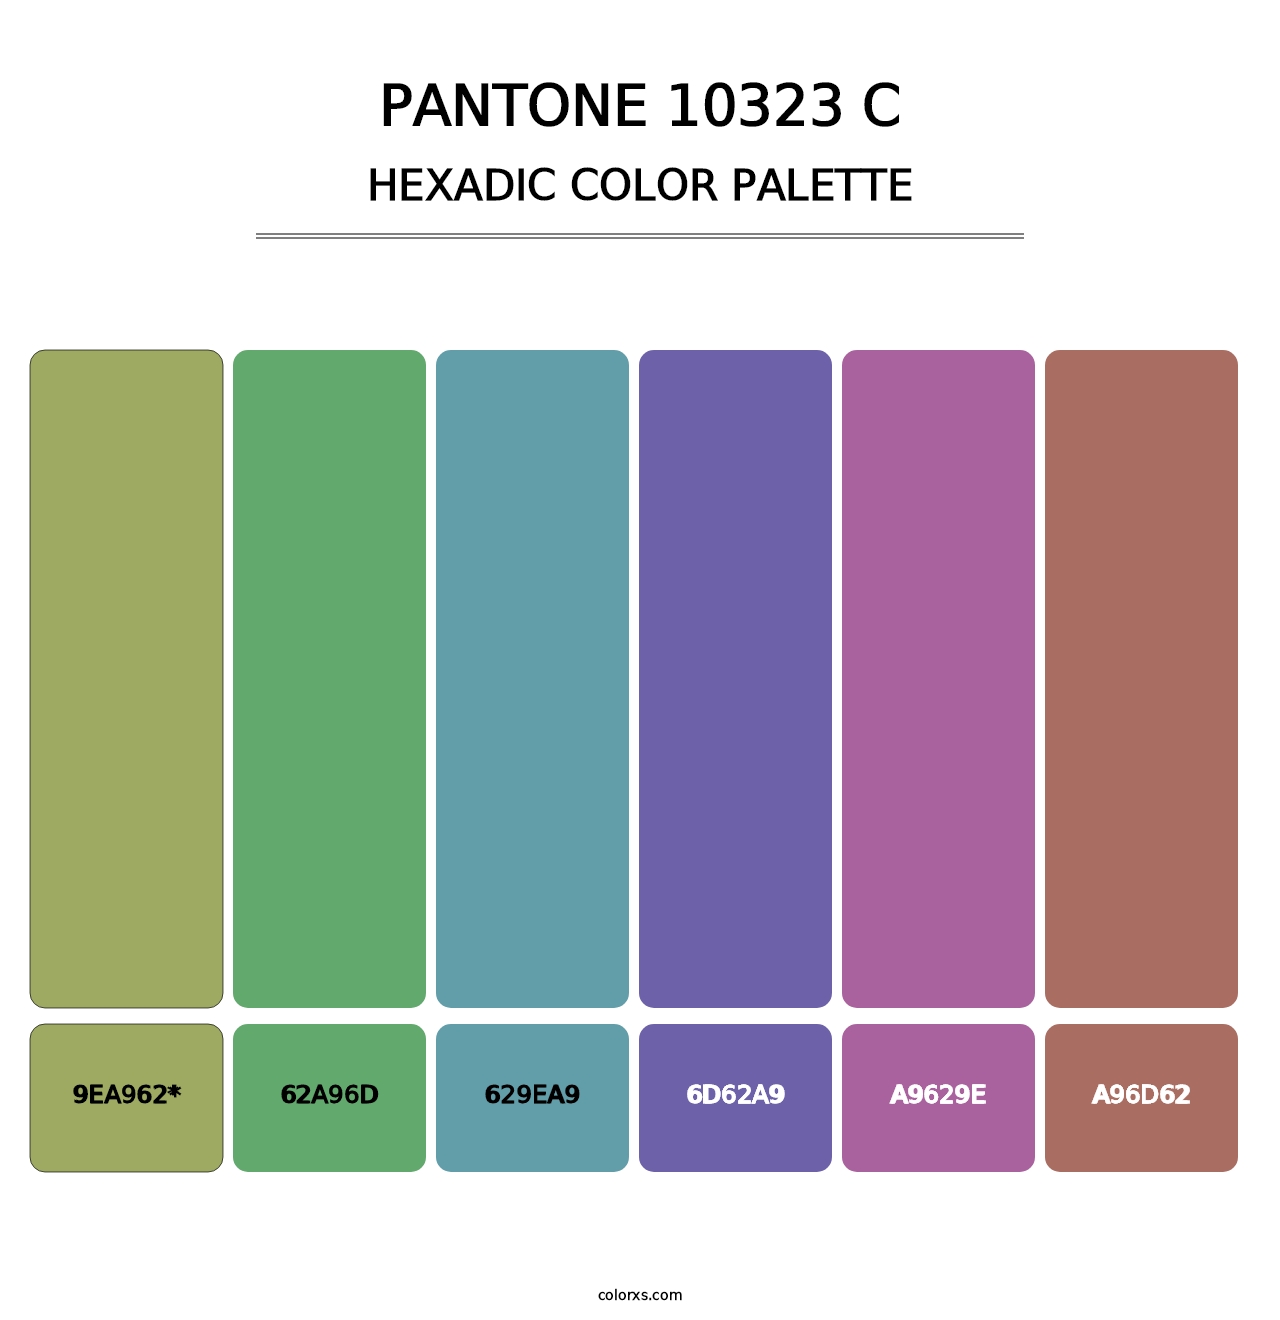 PANTONE 10323 C - Hexadic Color Palette